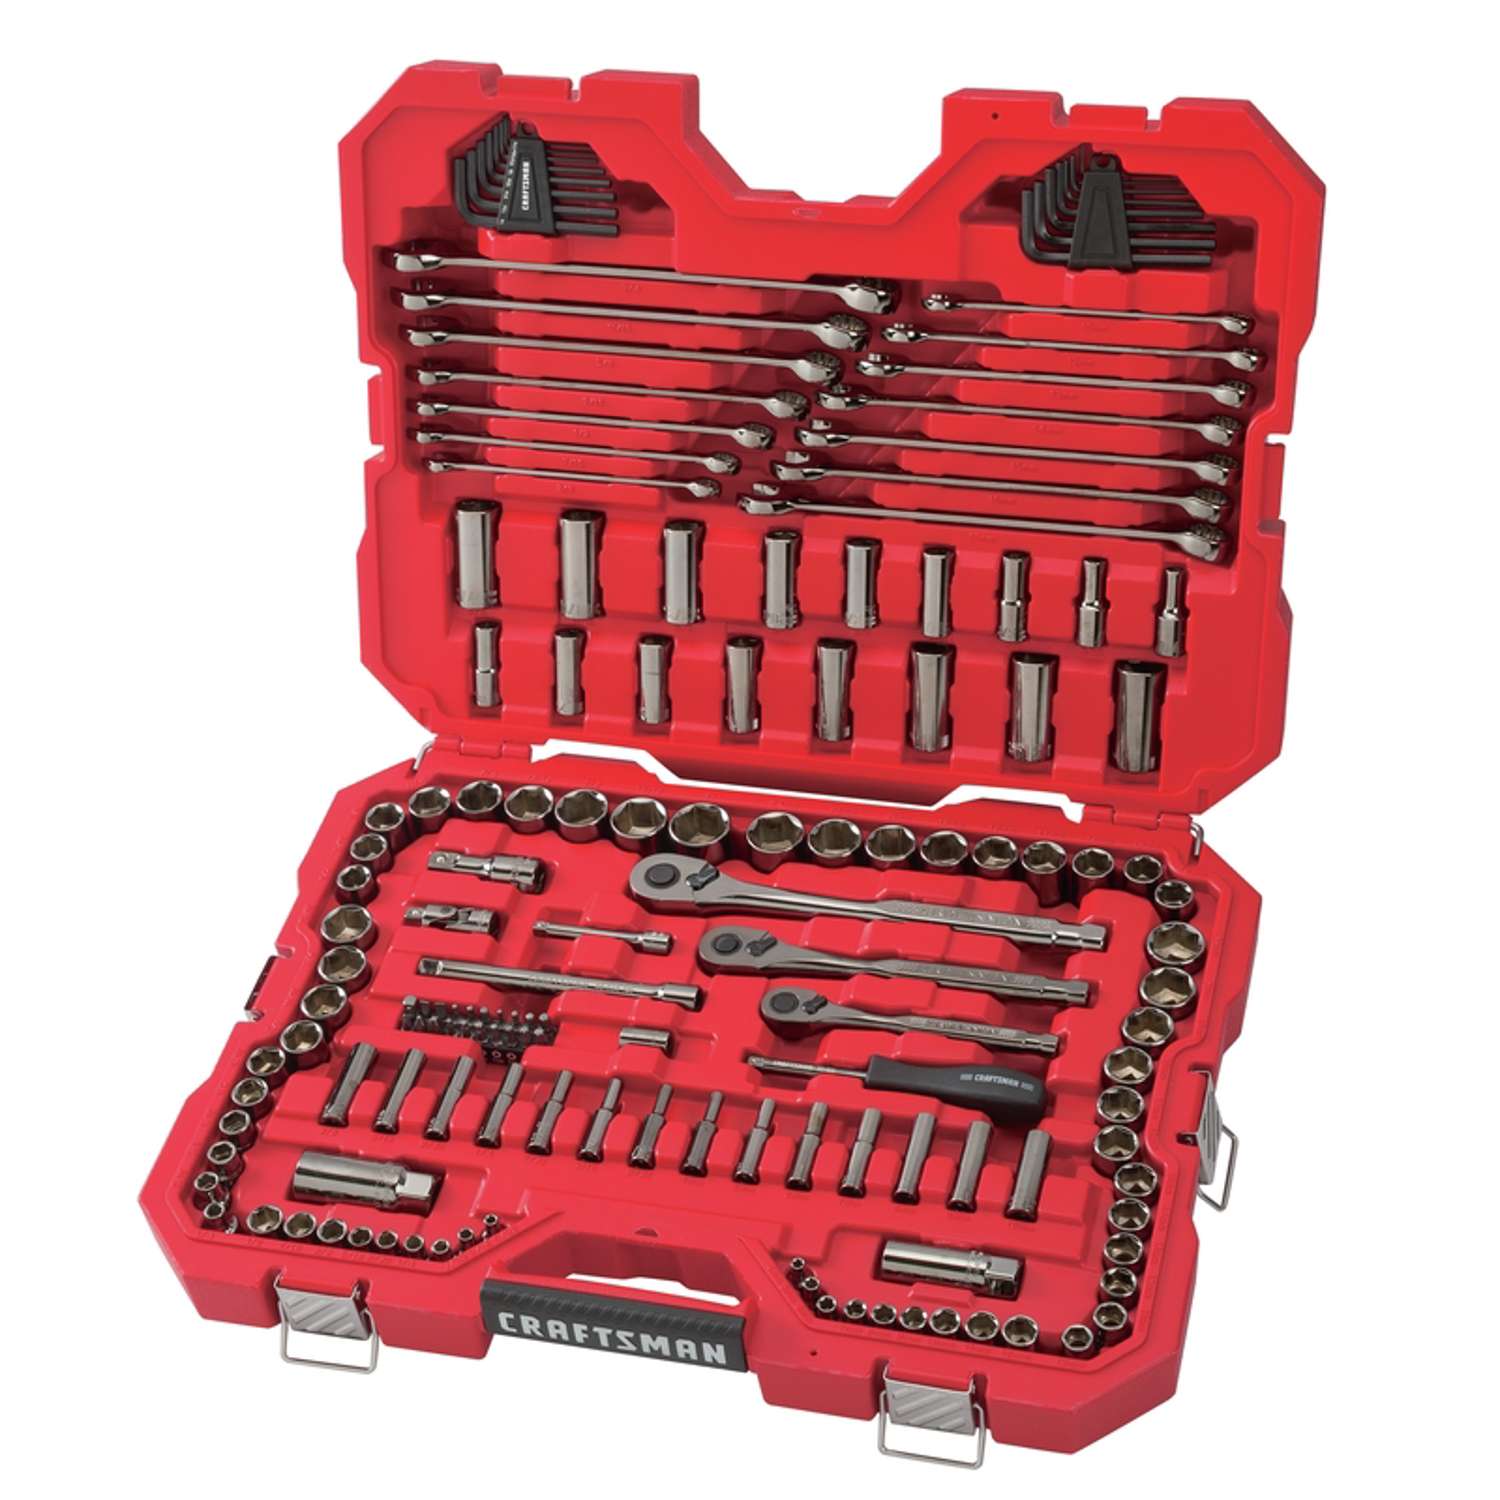 Craftsman Tool Storage and Organization - Ace Hardware